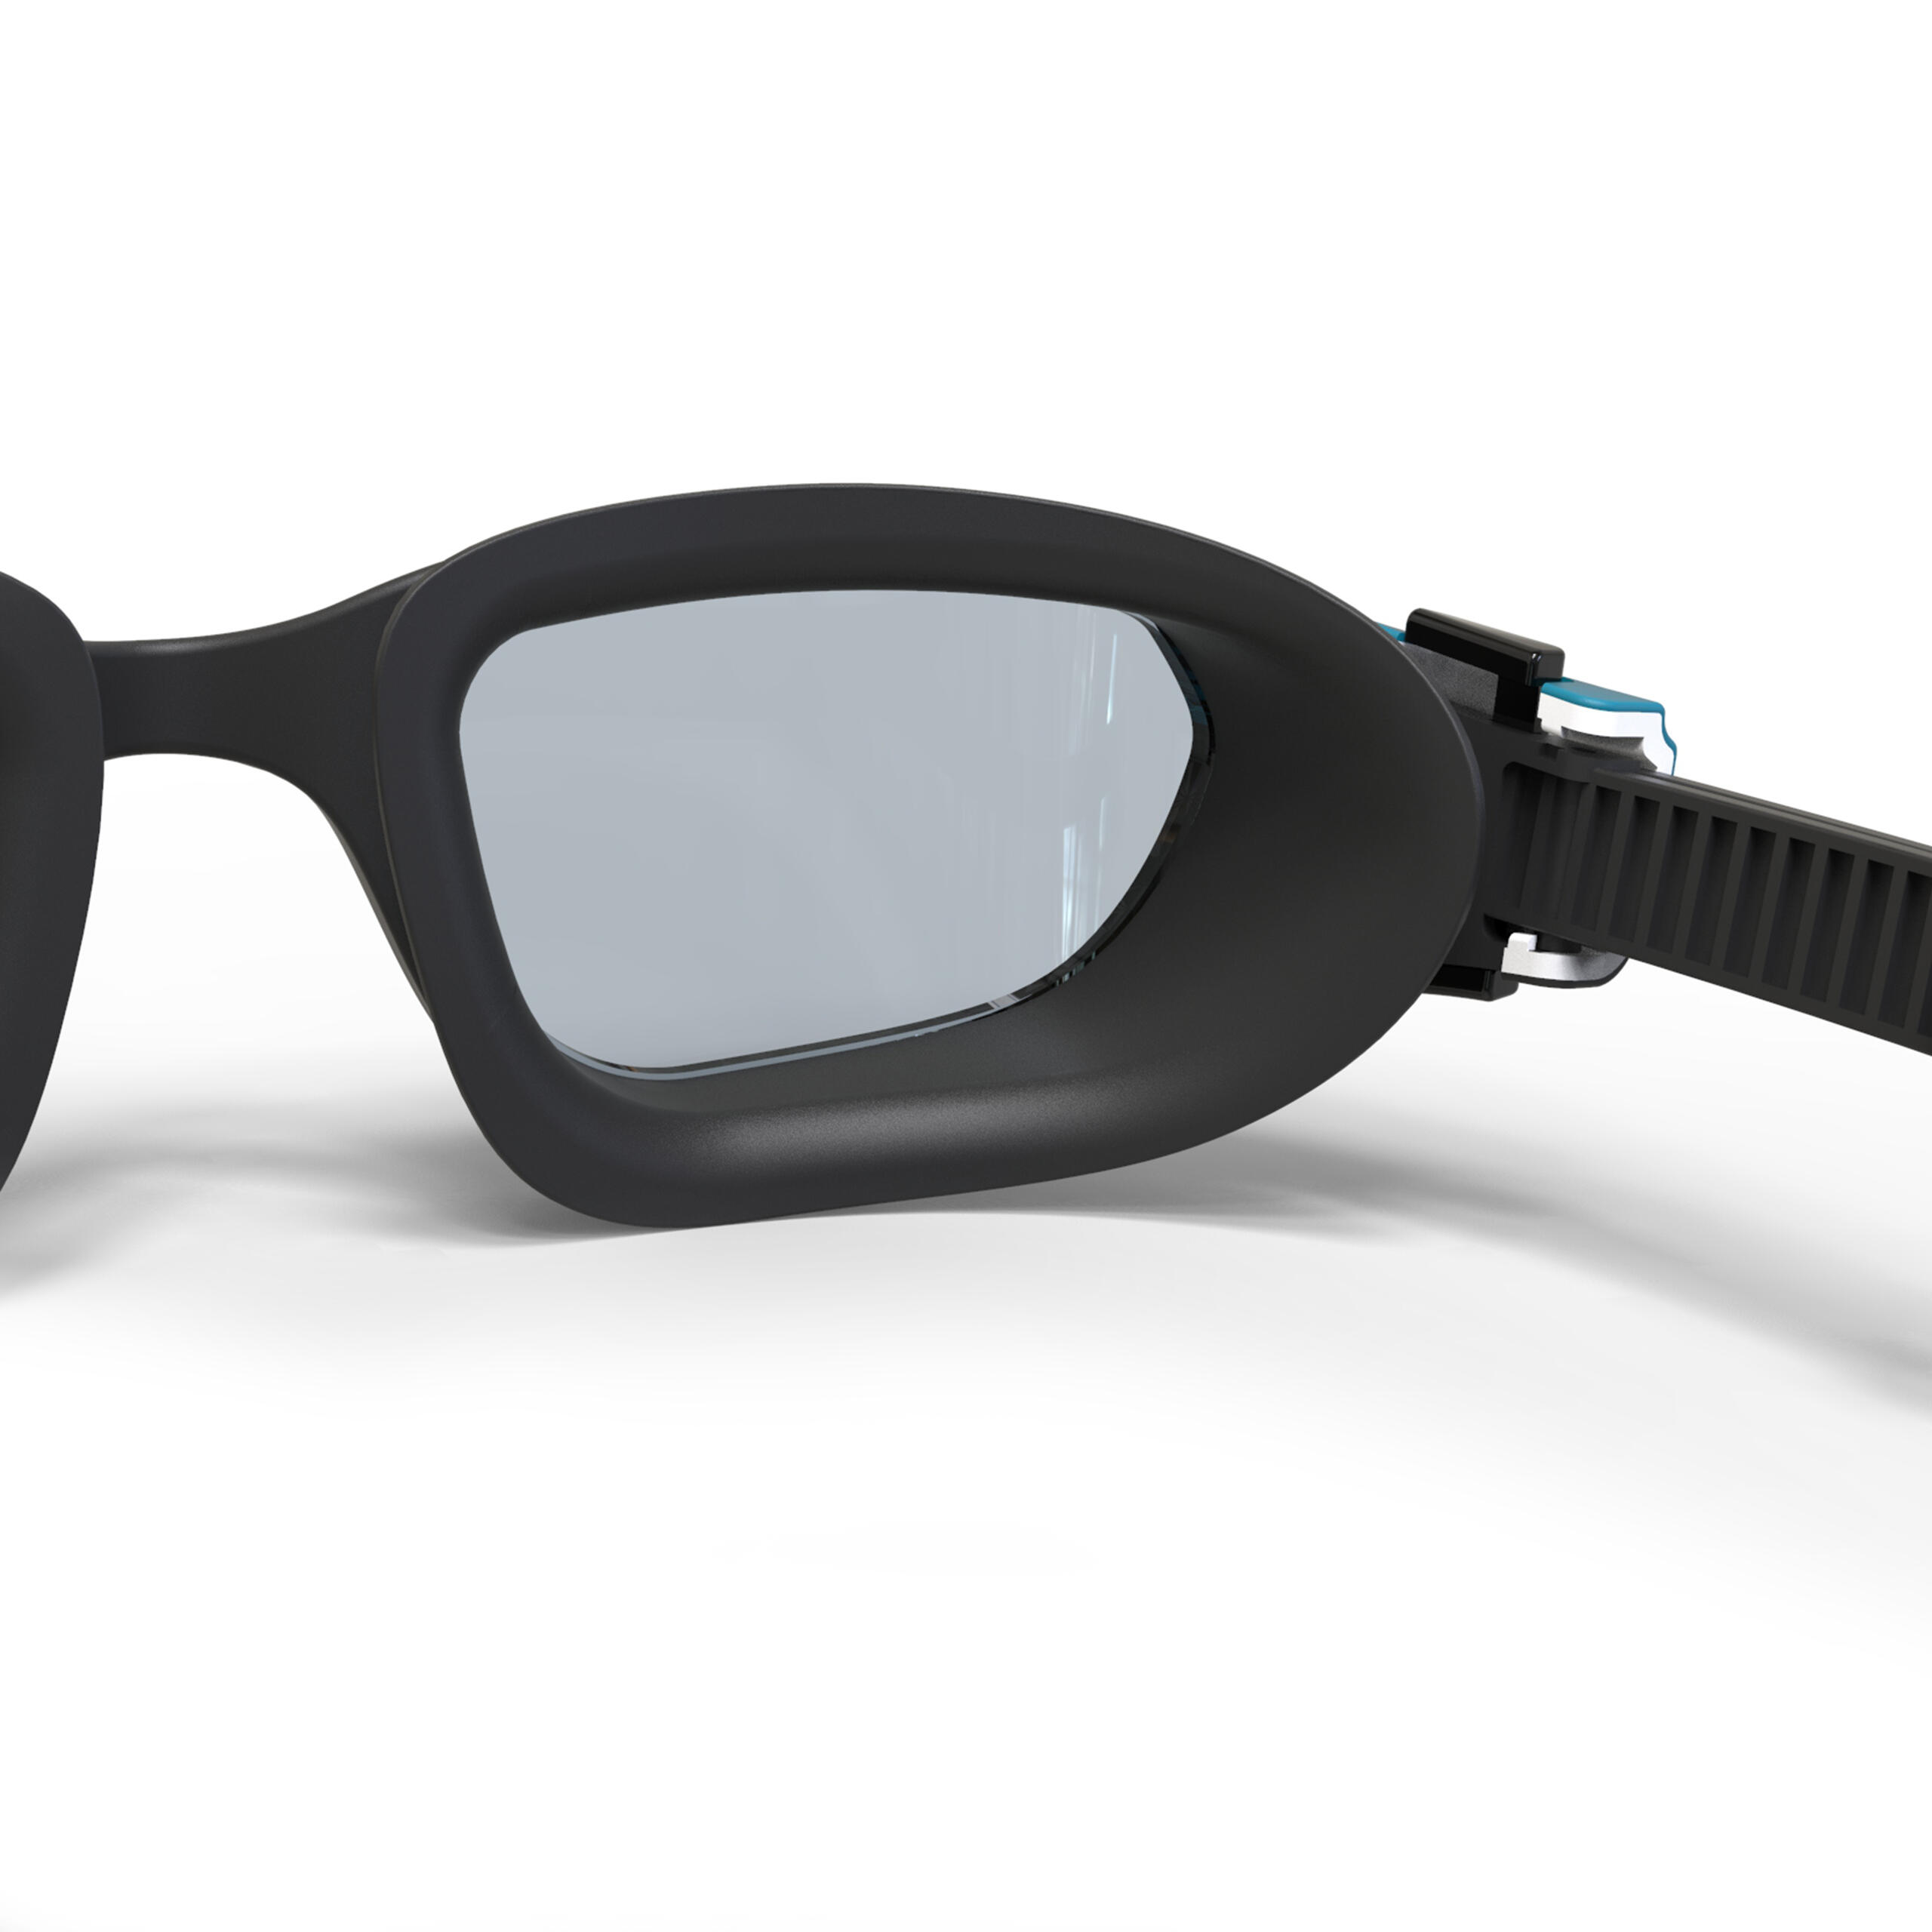 SPIRIT swimming goggles - Polarised lenses - Large size - Black blue 5/5